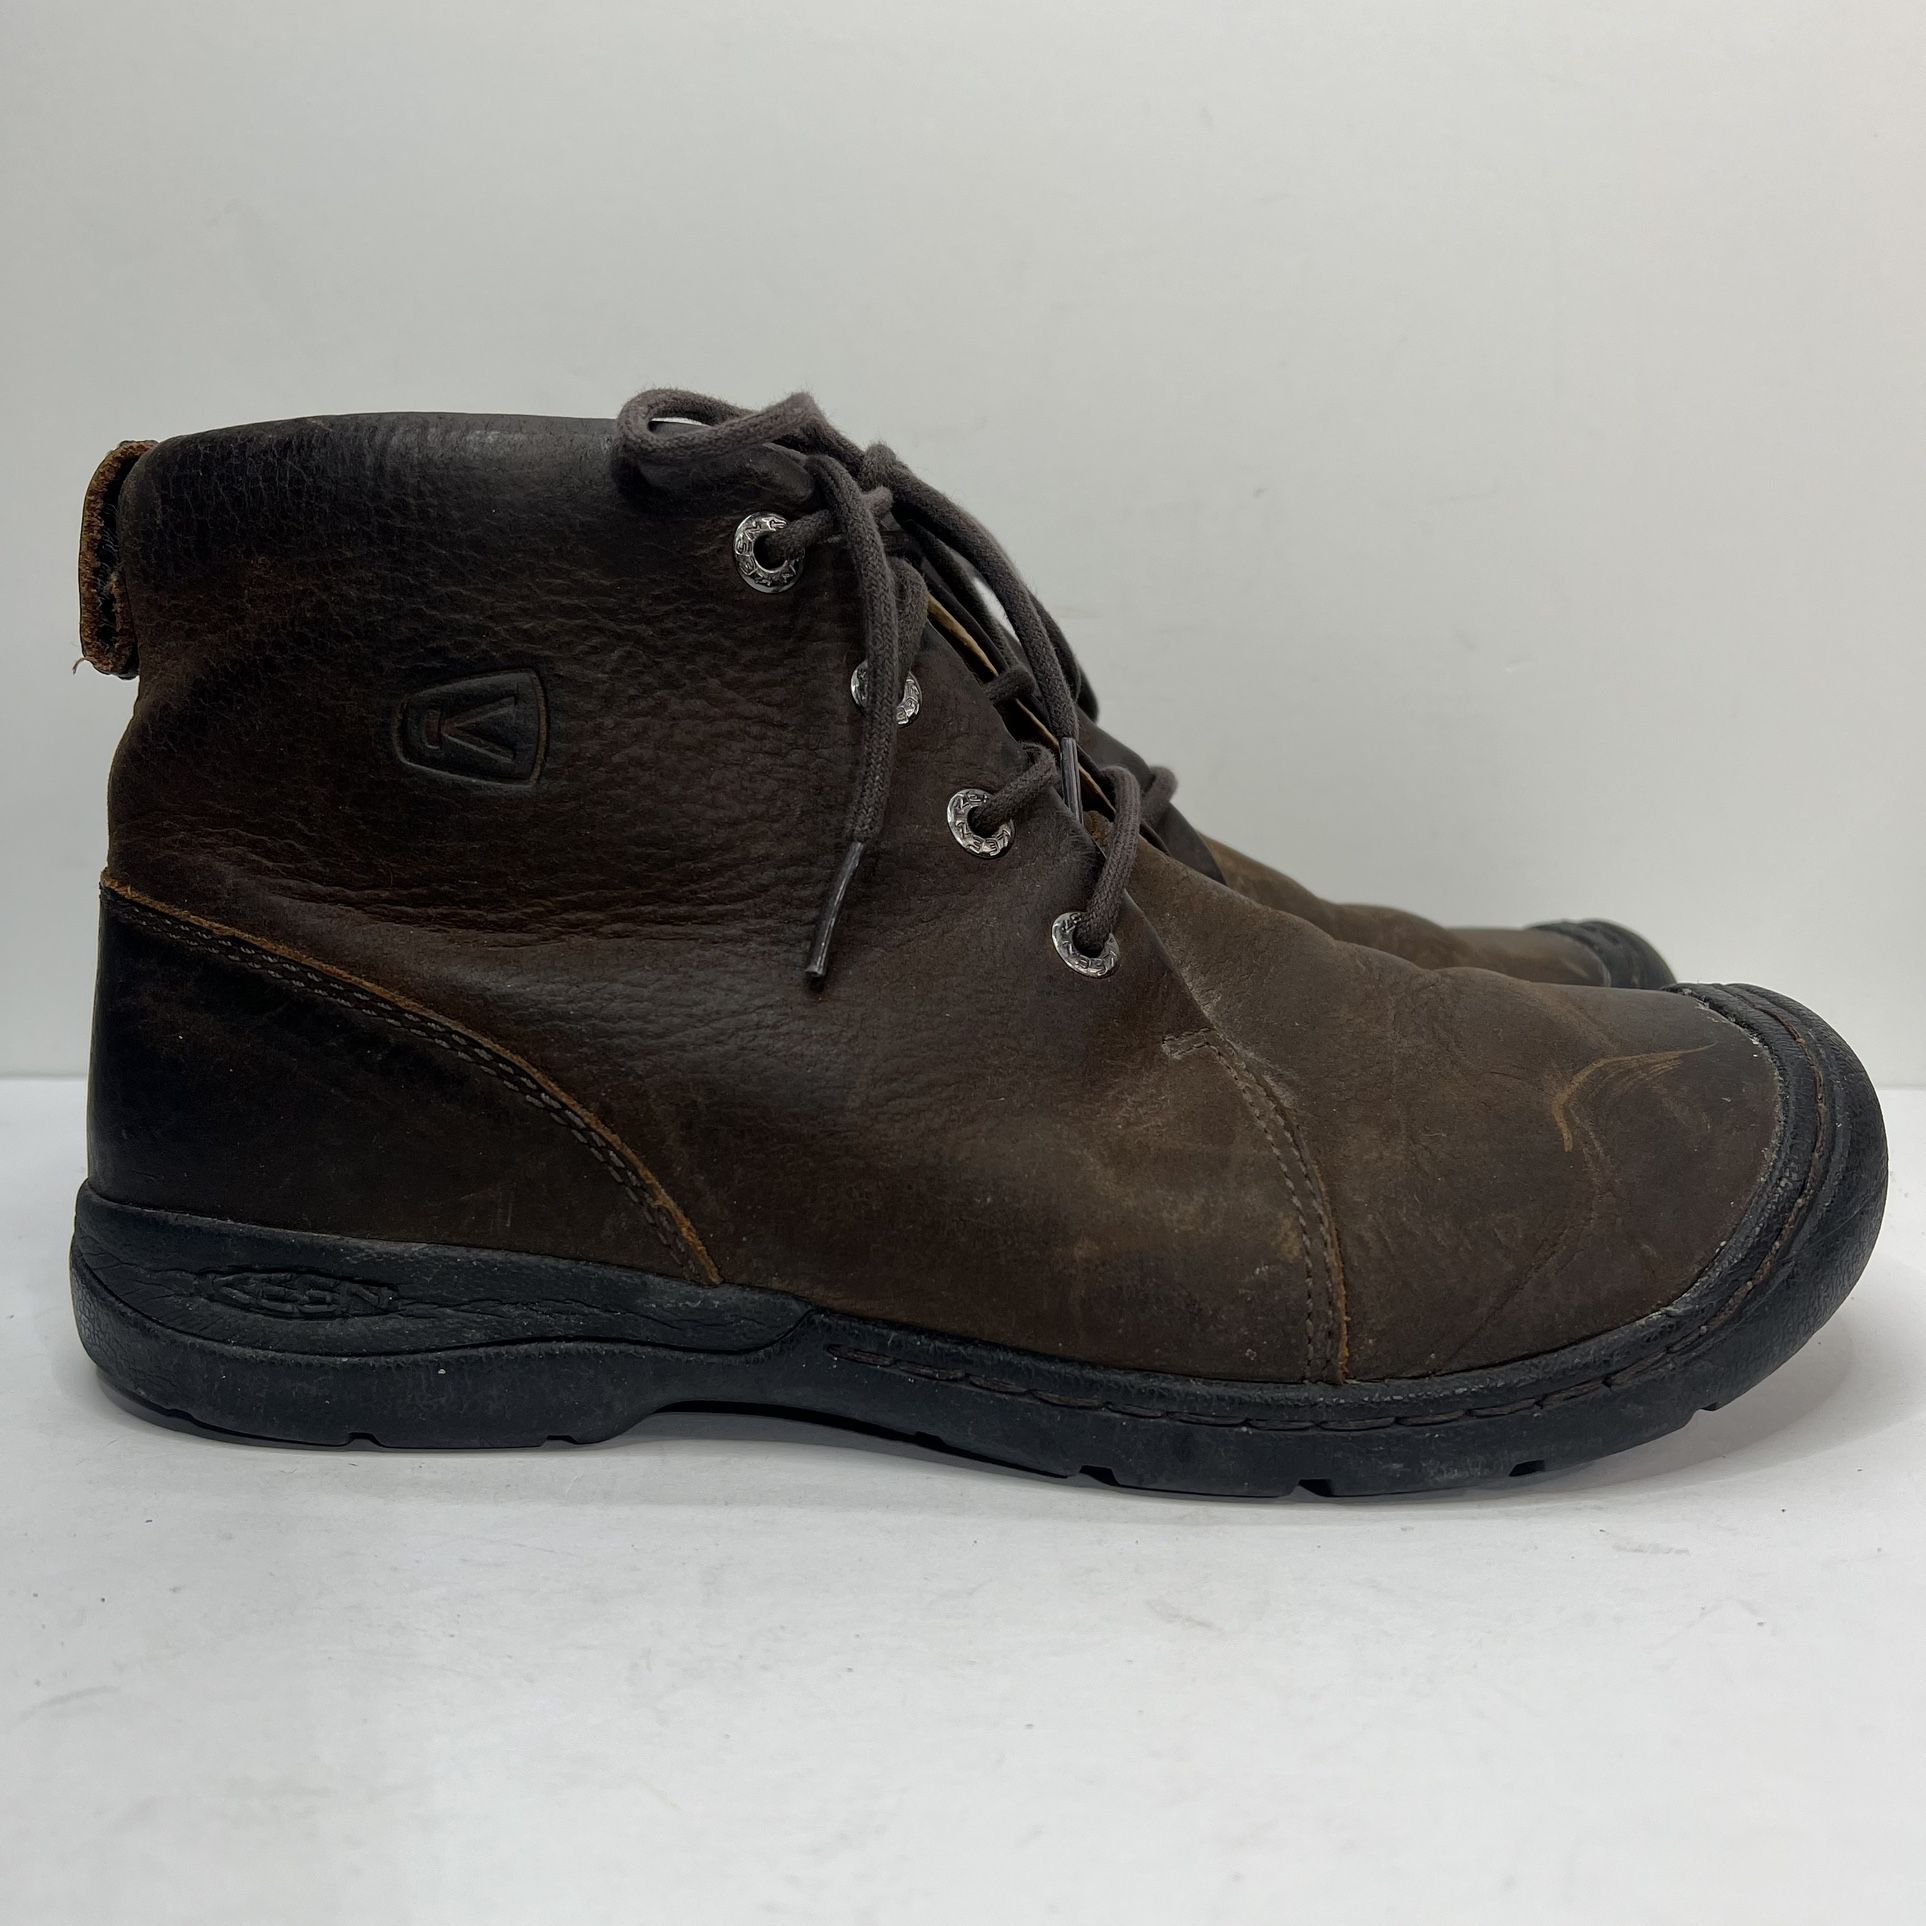 Keen Bidwell Leather Chukka Boots